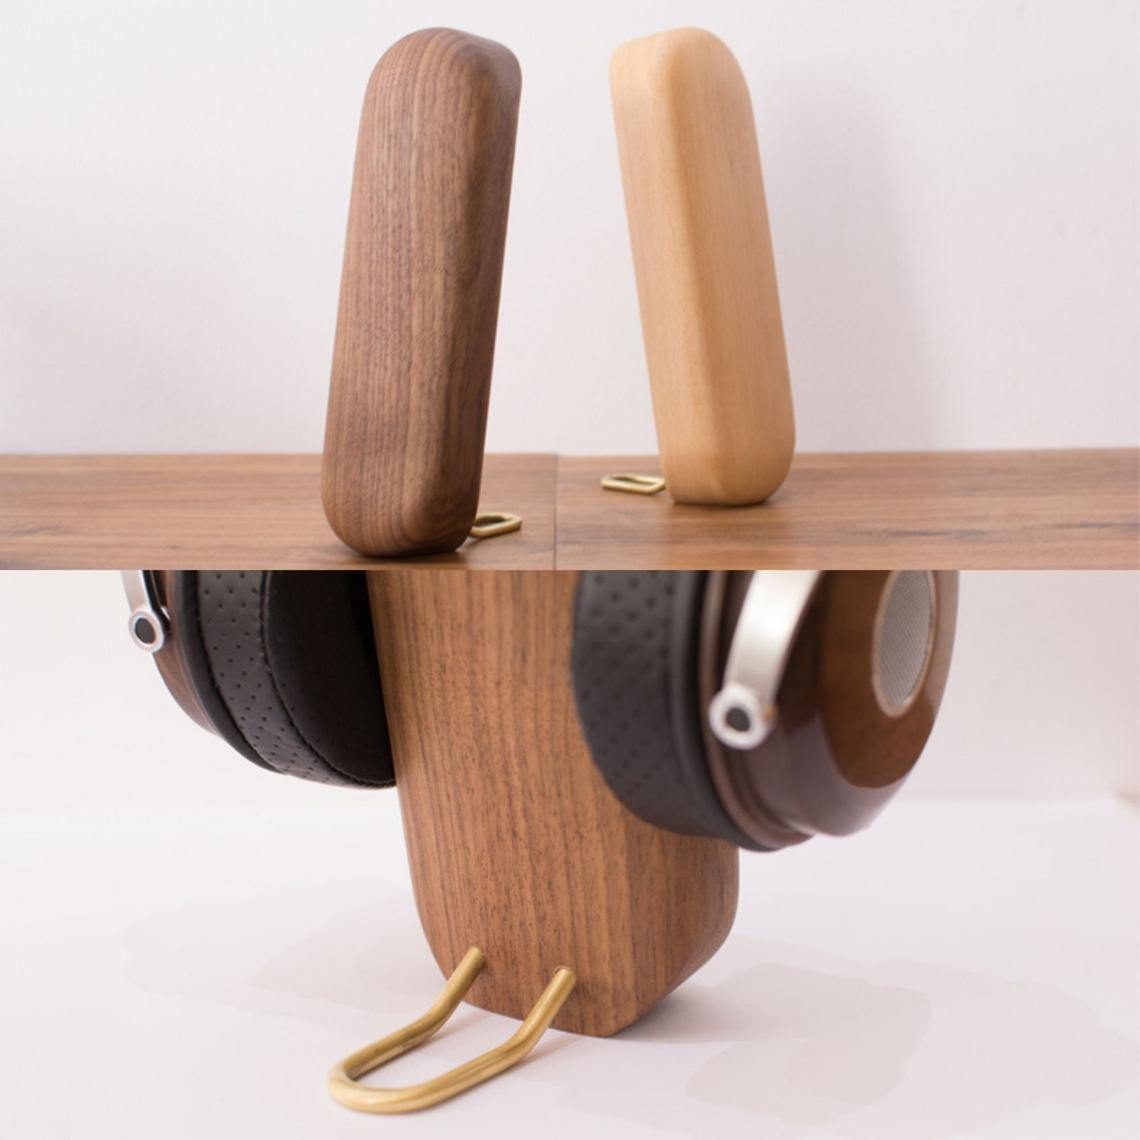 Wooden headphone stand, desk headphone holder, headphone holder wood, headset stand wood, headphone stand wood, headphone hanger, music gift